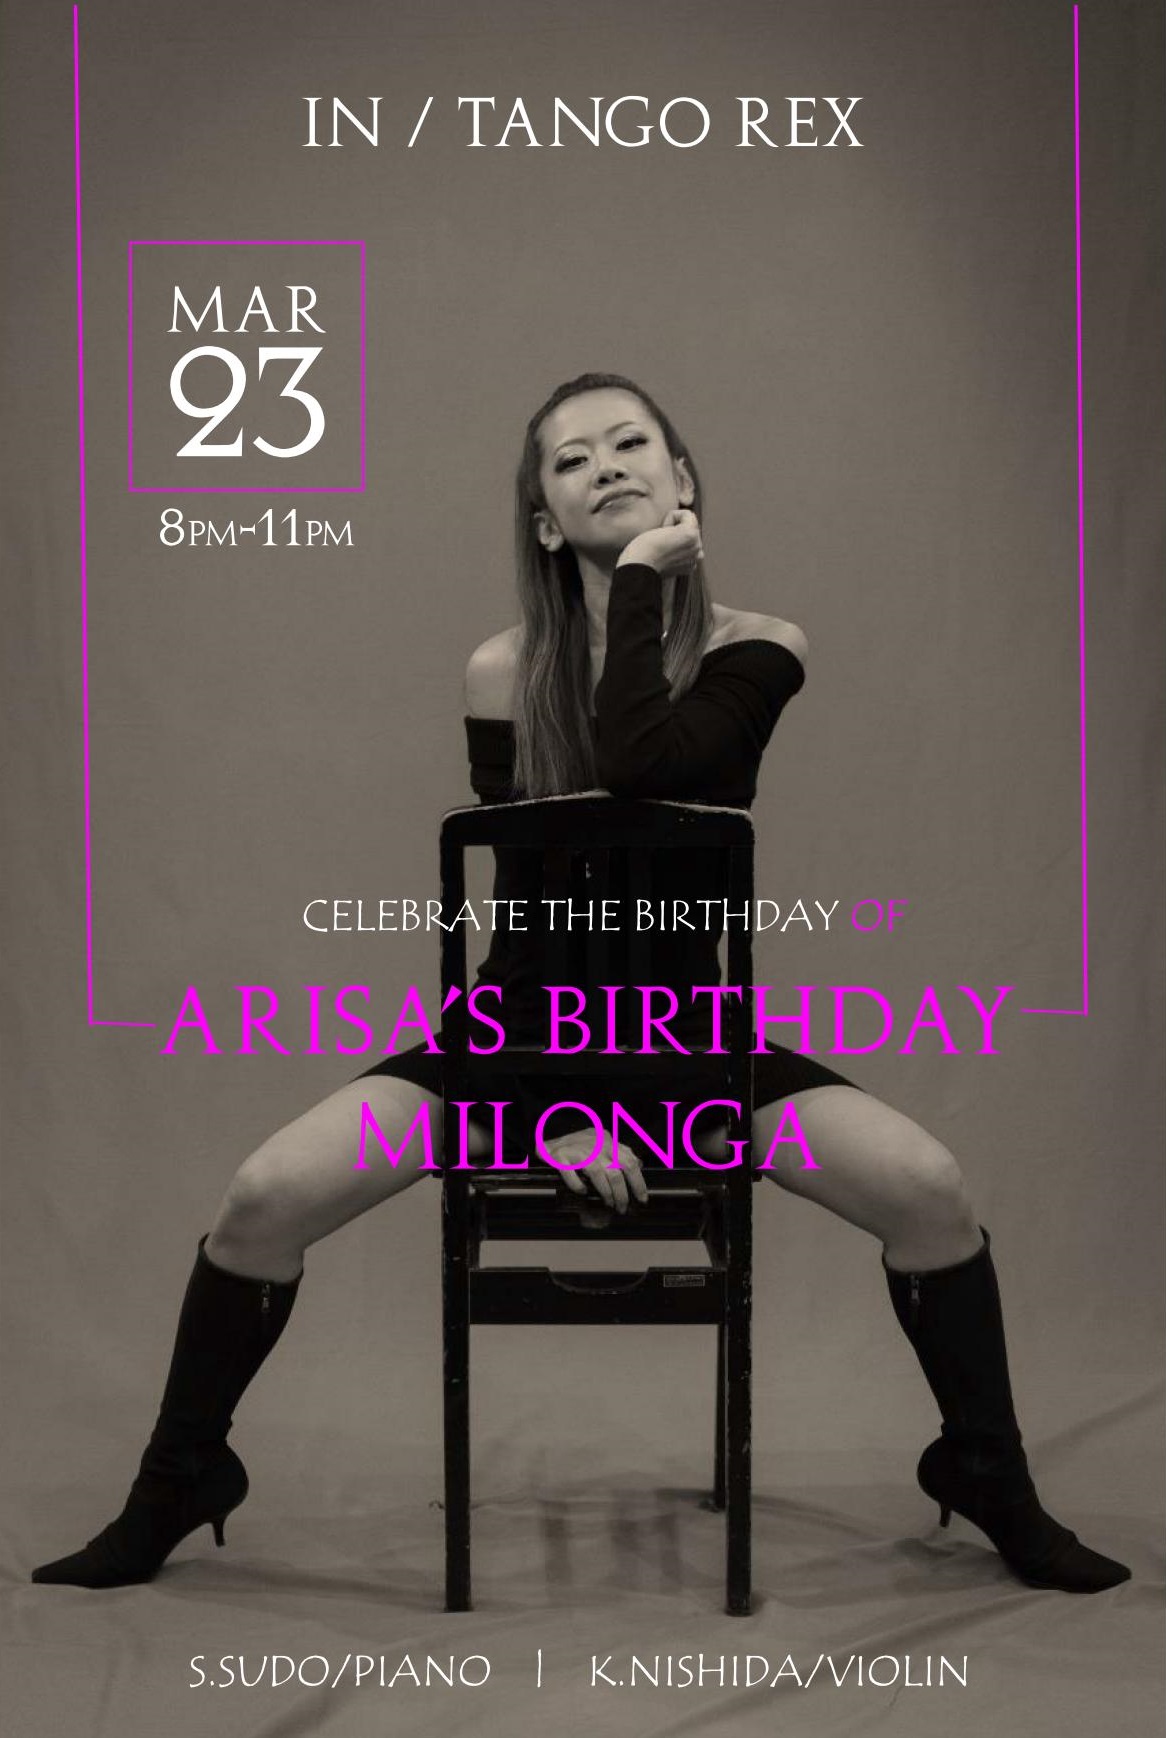 3/23 ARISA’s Birthday Special Live Milonga